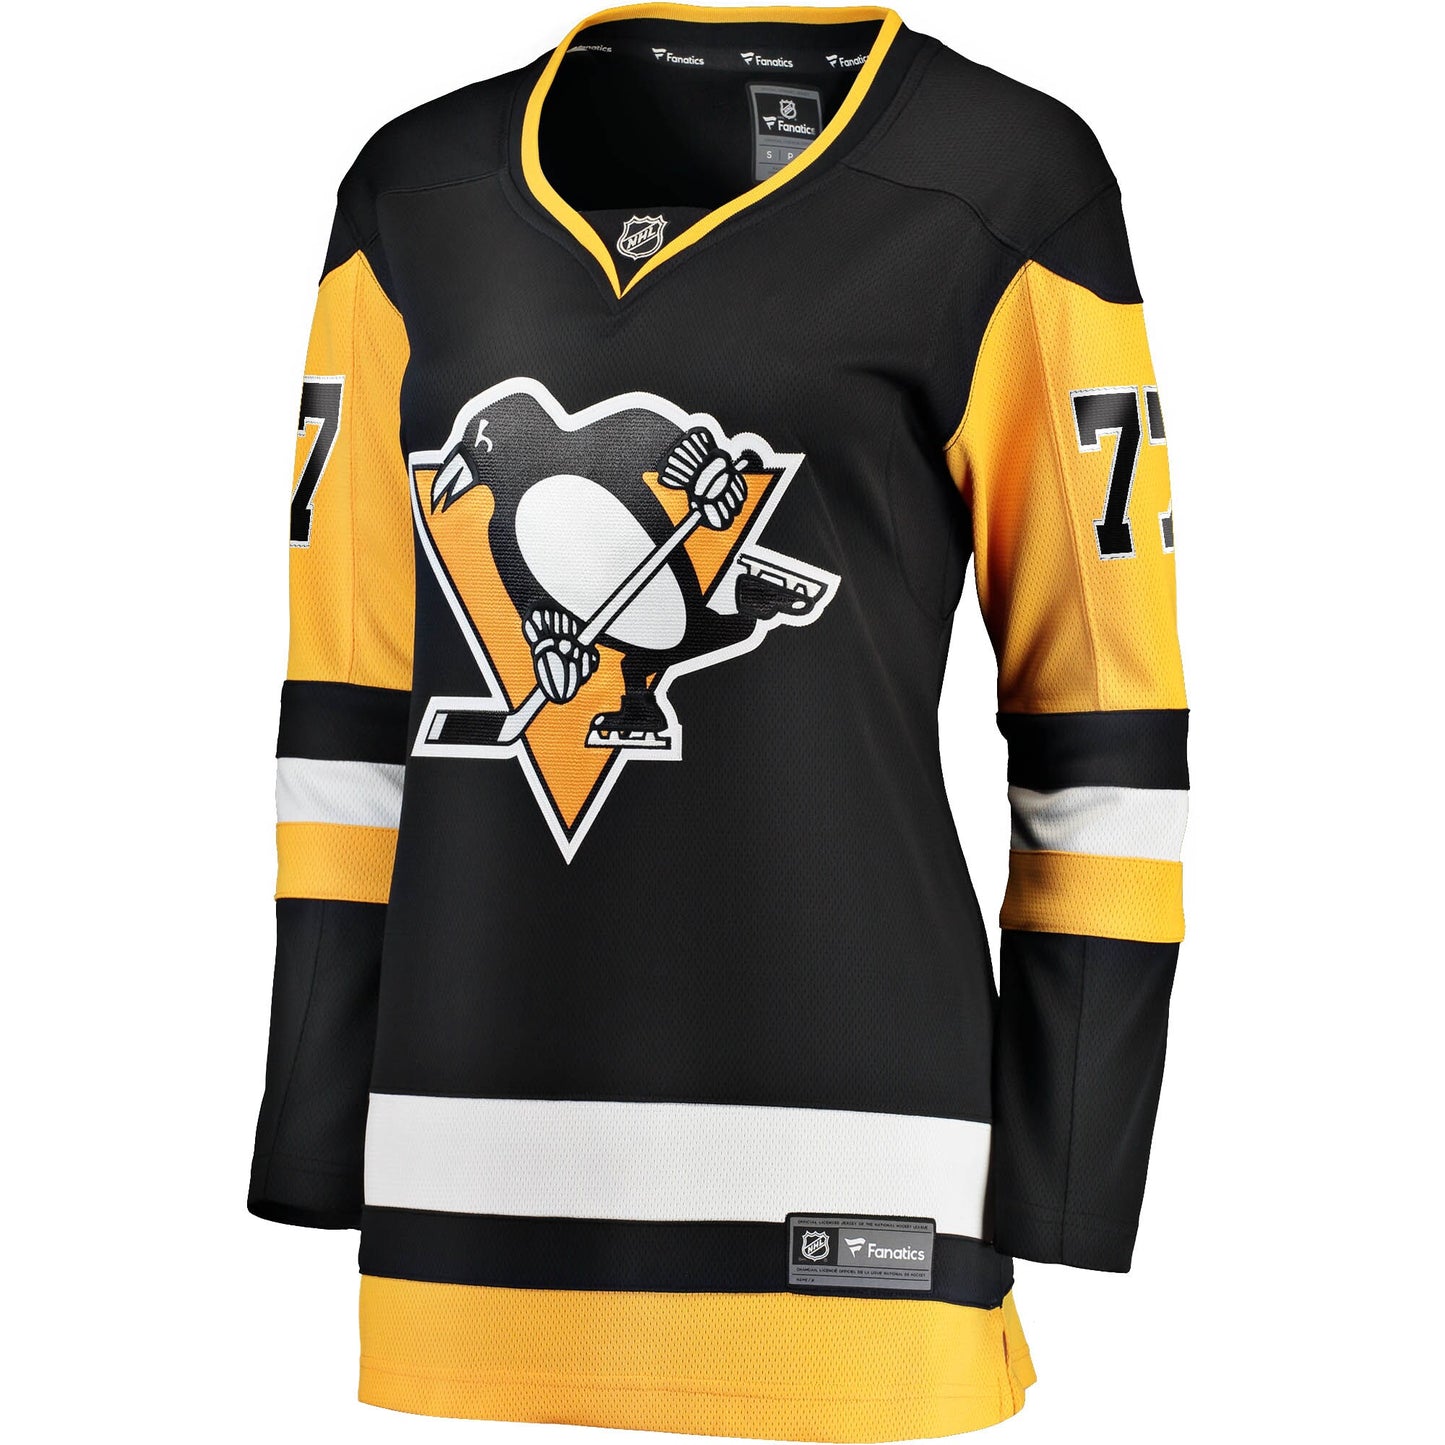 Jeff Carter Pittsburgh Penguins Fanatics Branded Women's 2017/18 Home Breakaway Jersey - Black